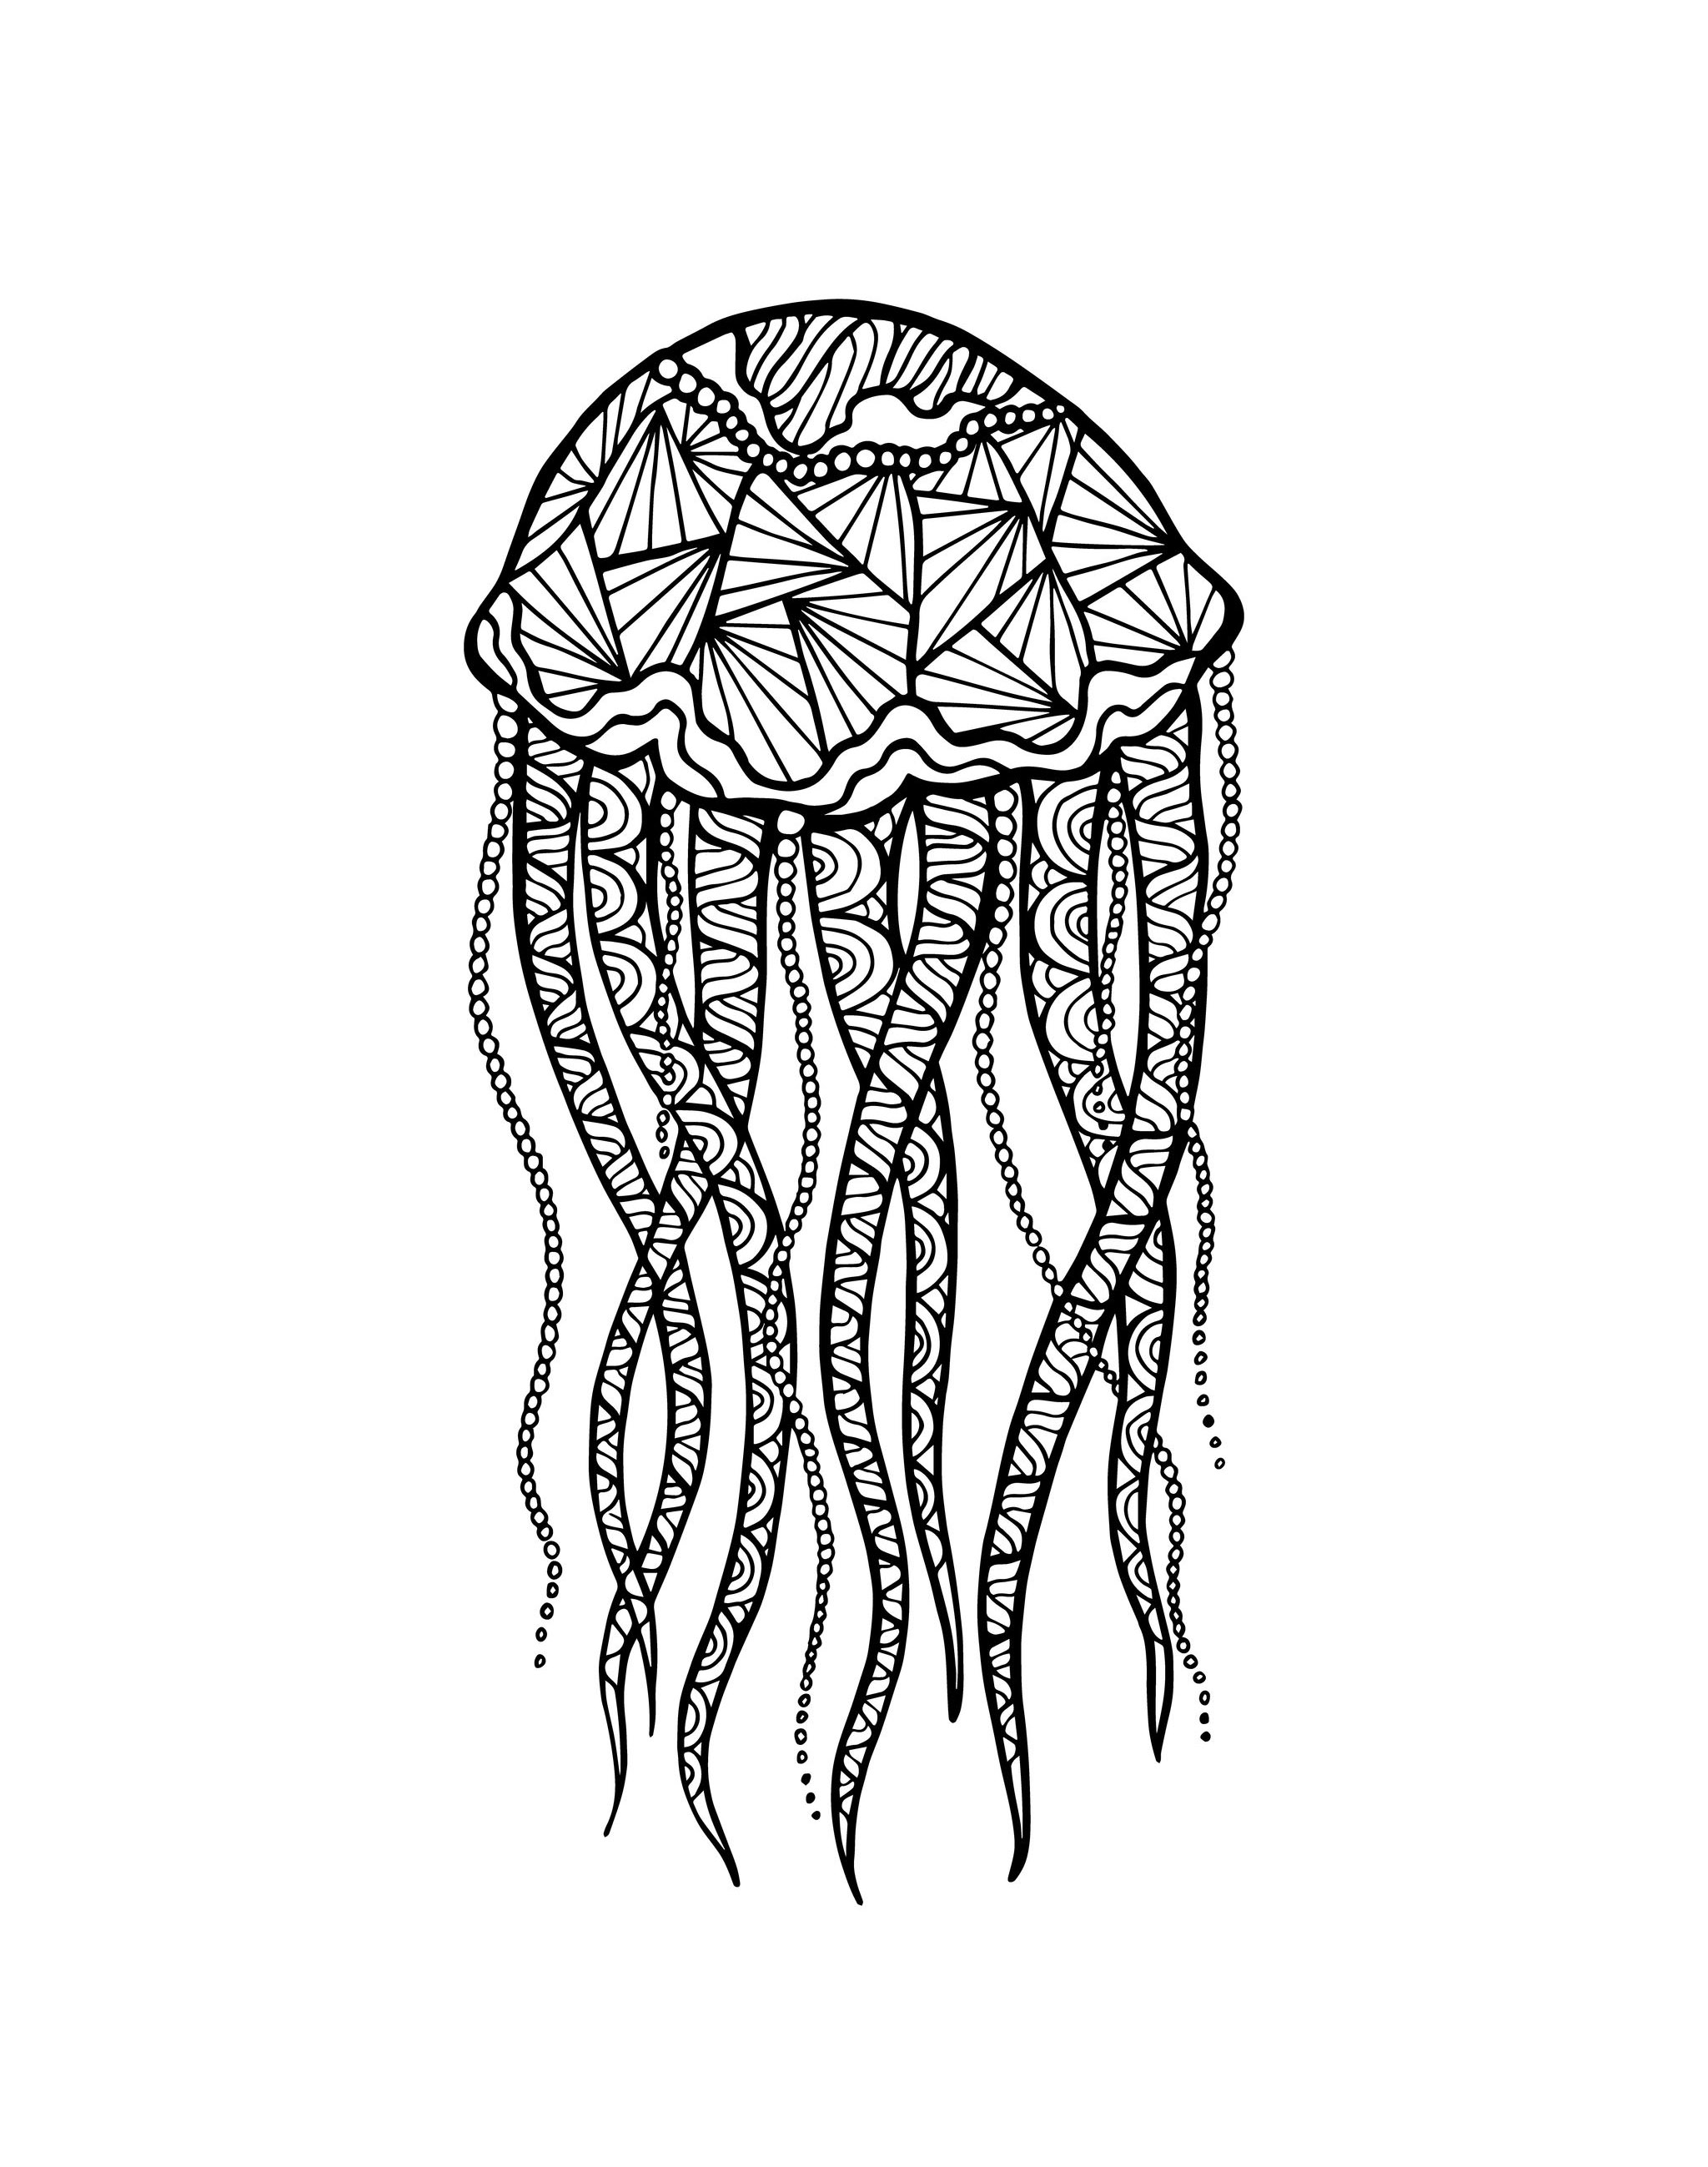 Medusa, Zentangle to color, by Meggichka (123rf.com)